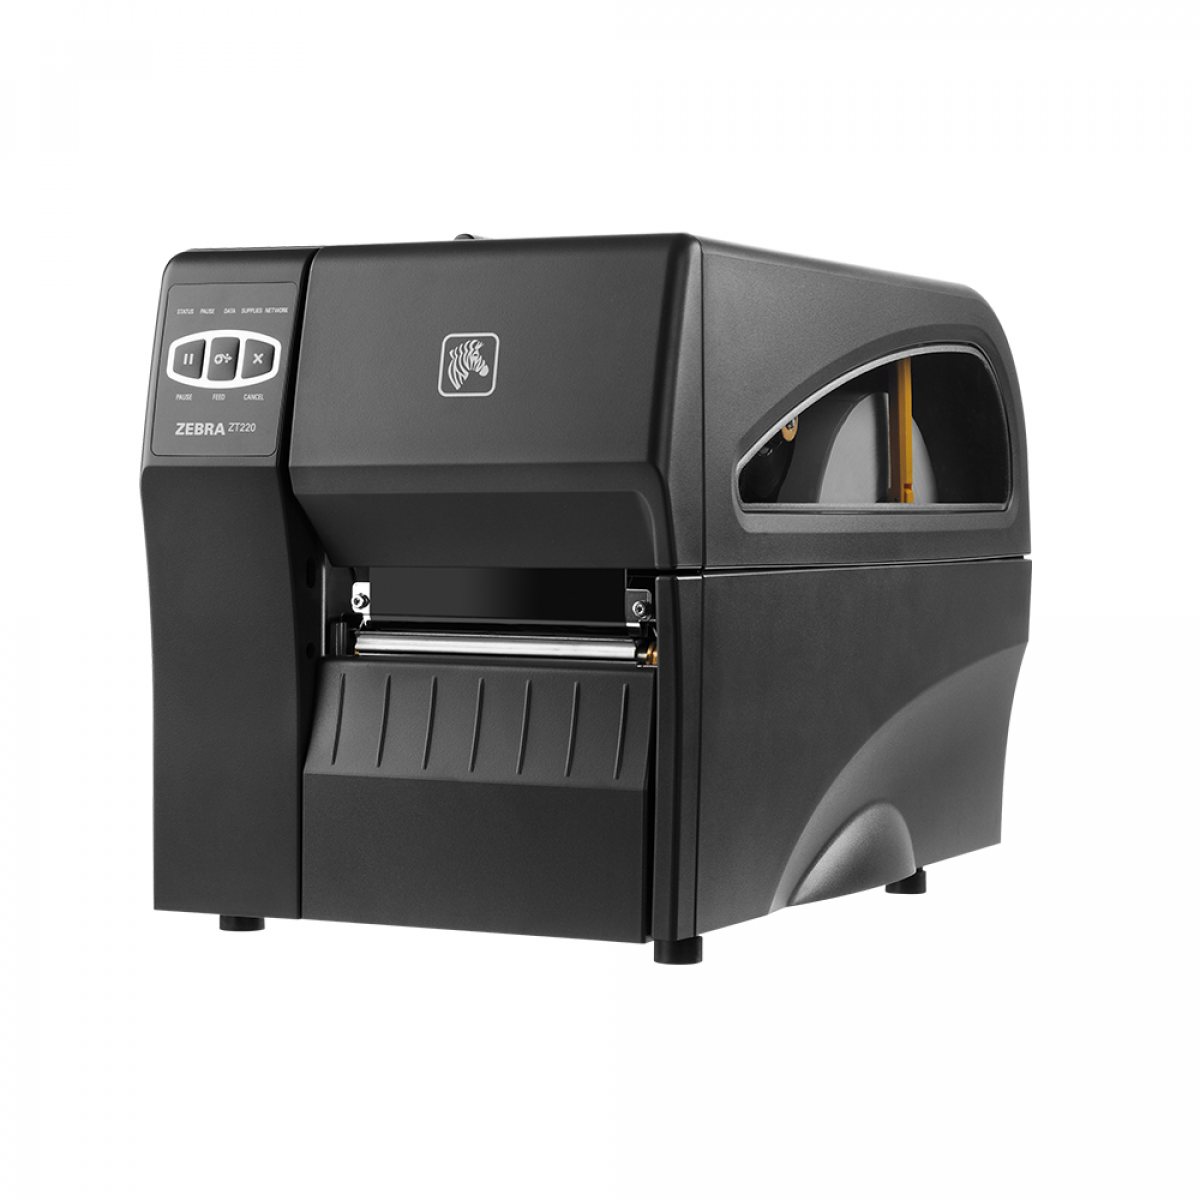 Zebra ZT220 industrial label printer